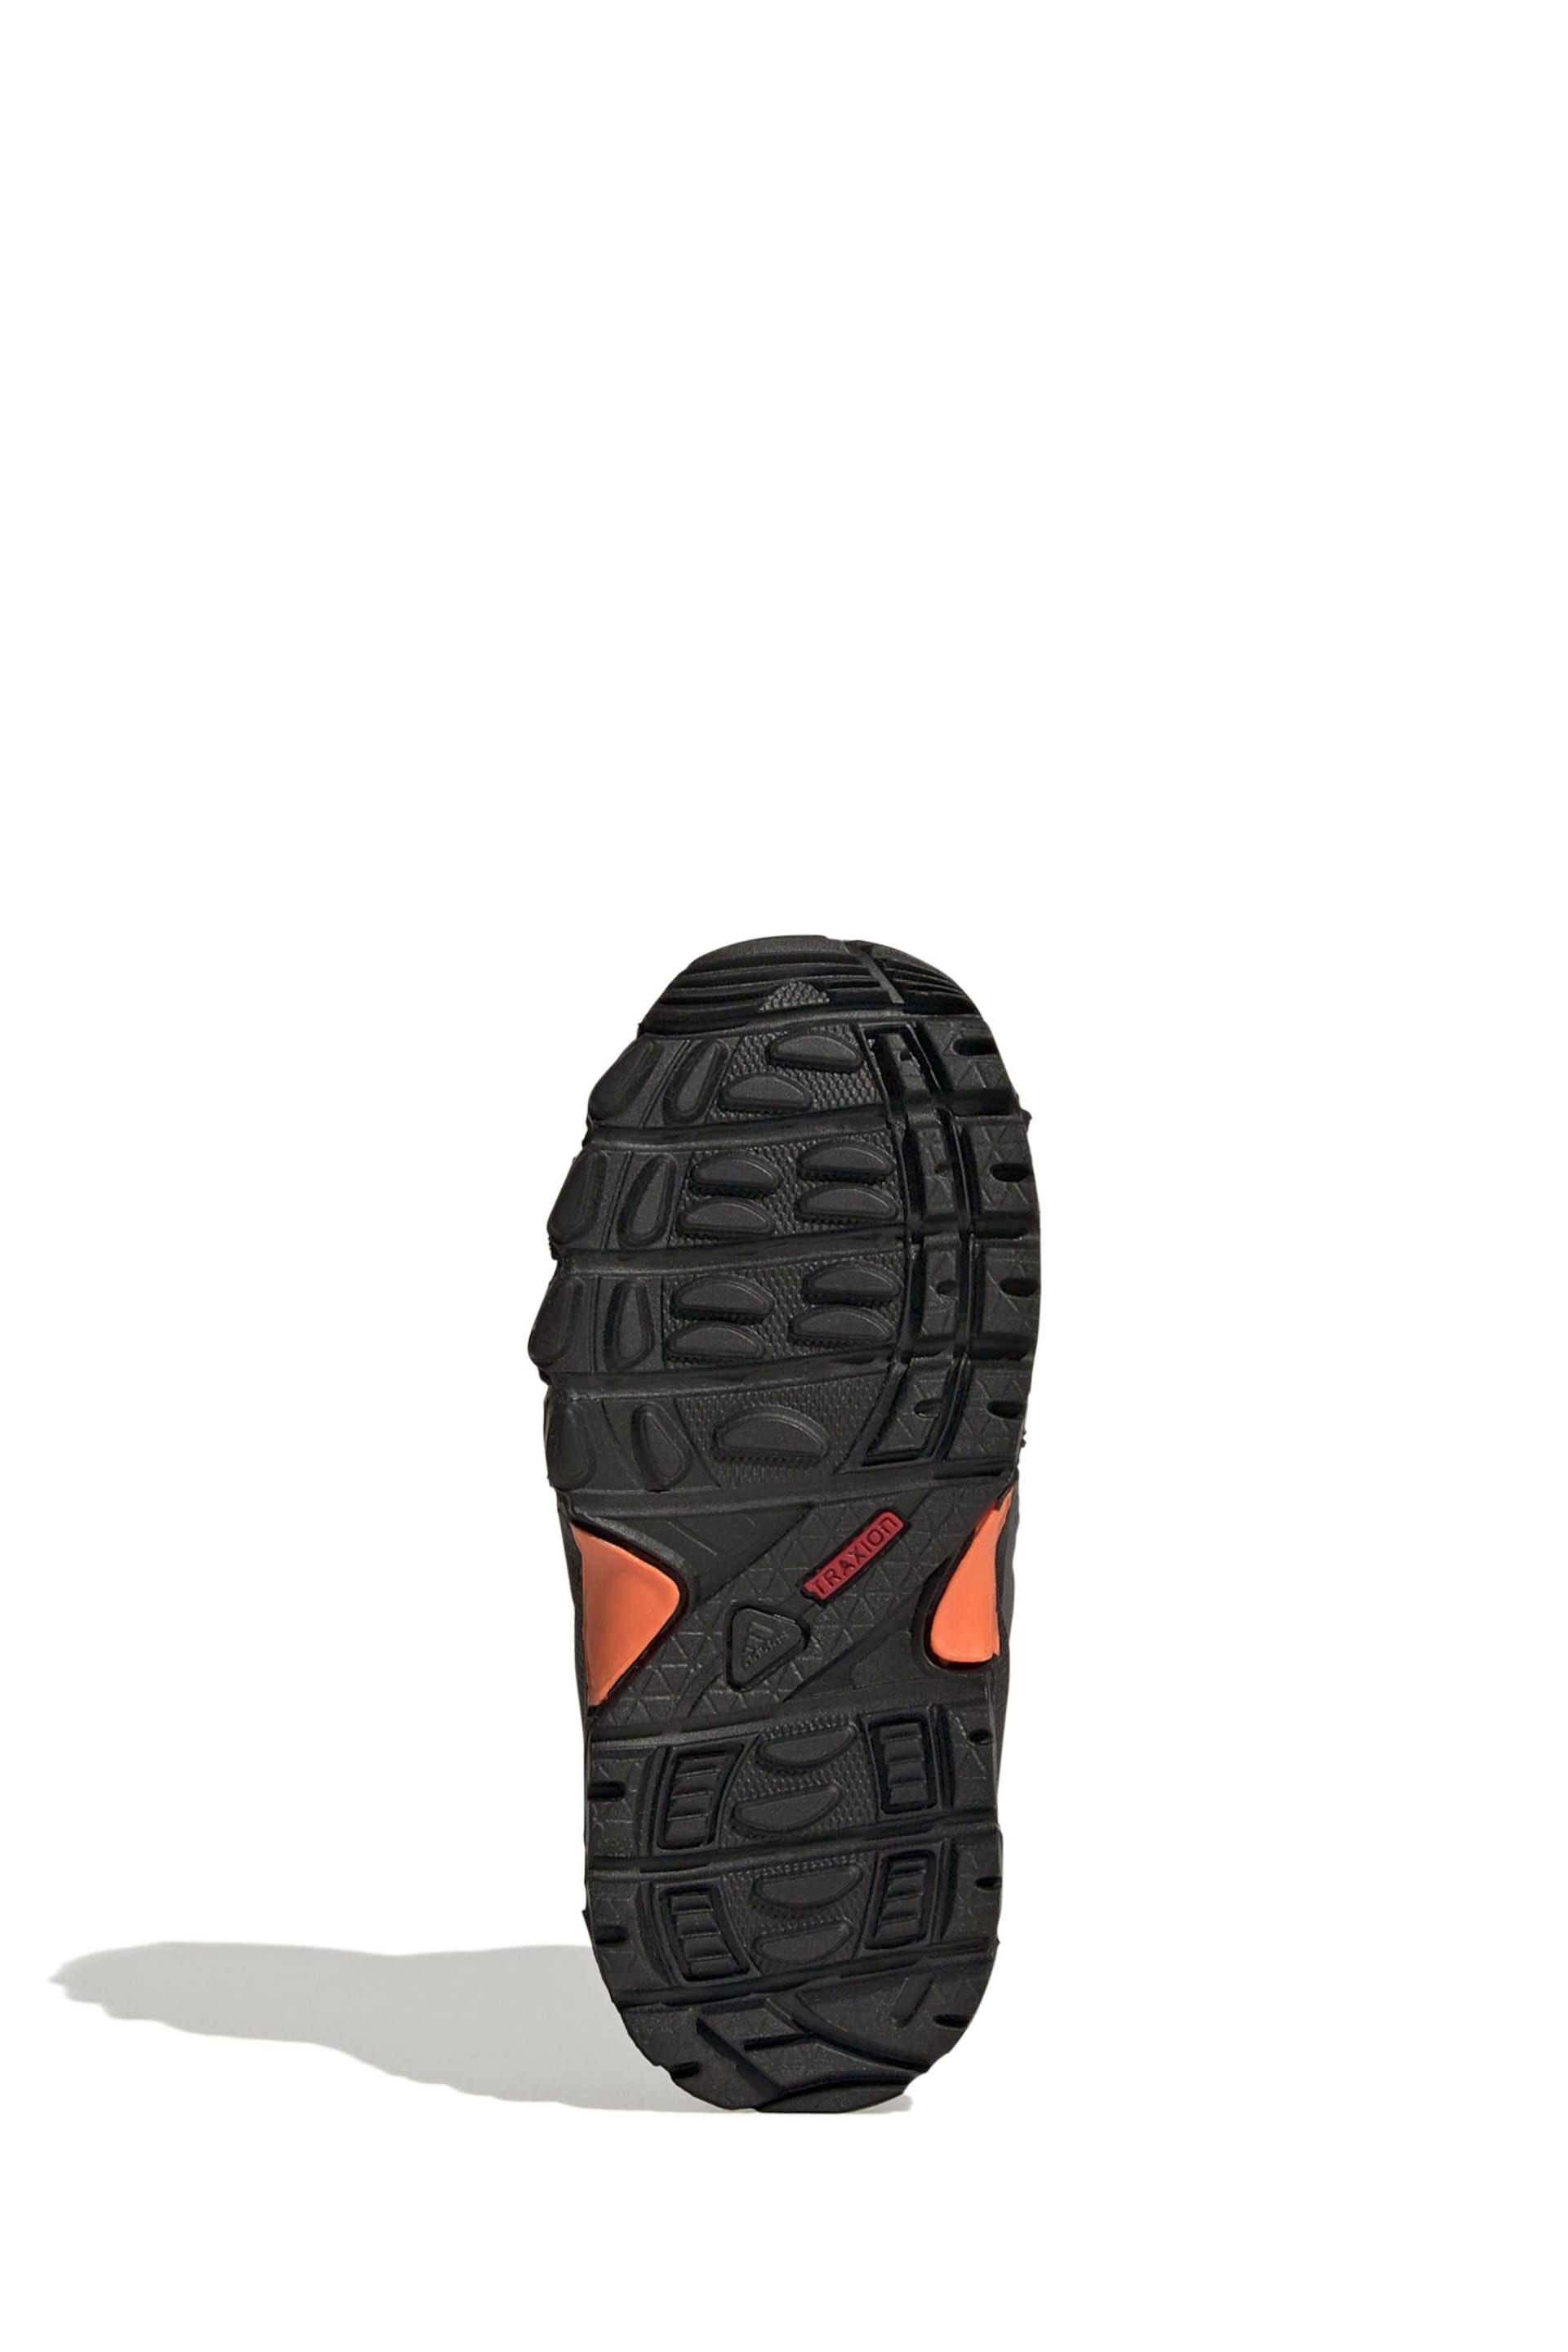 adidas Terrex Mid GTX Hiking Boots - Image 7 of 7